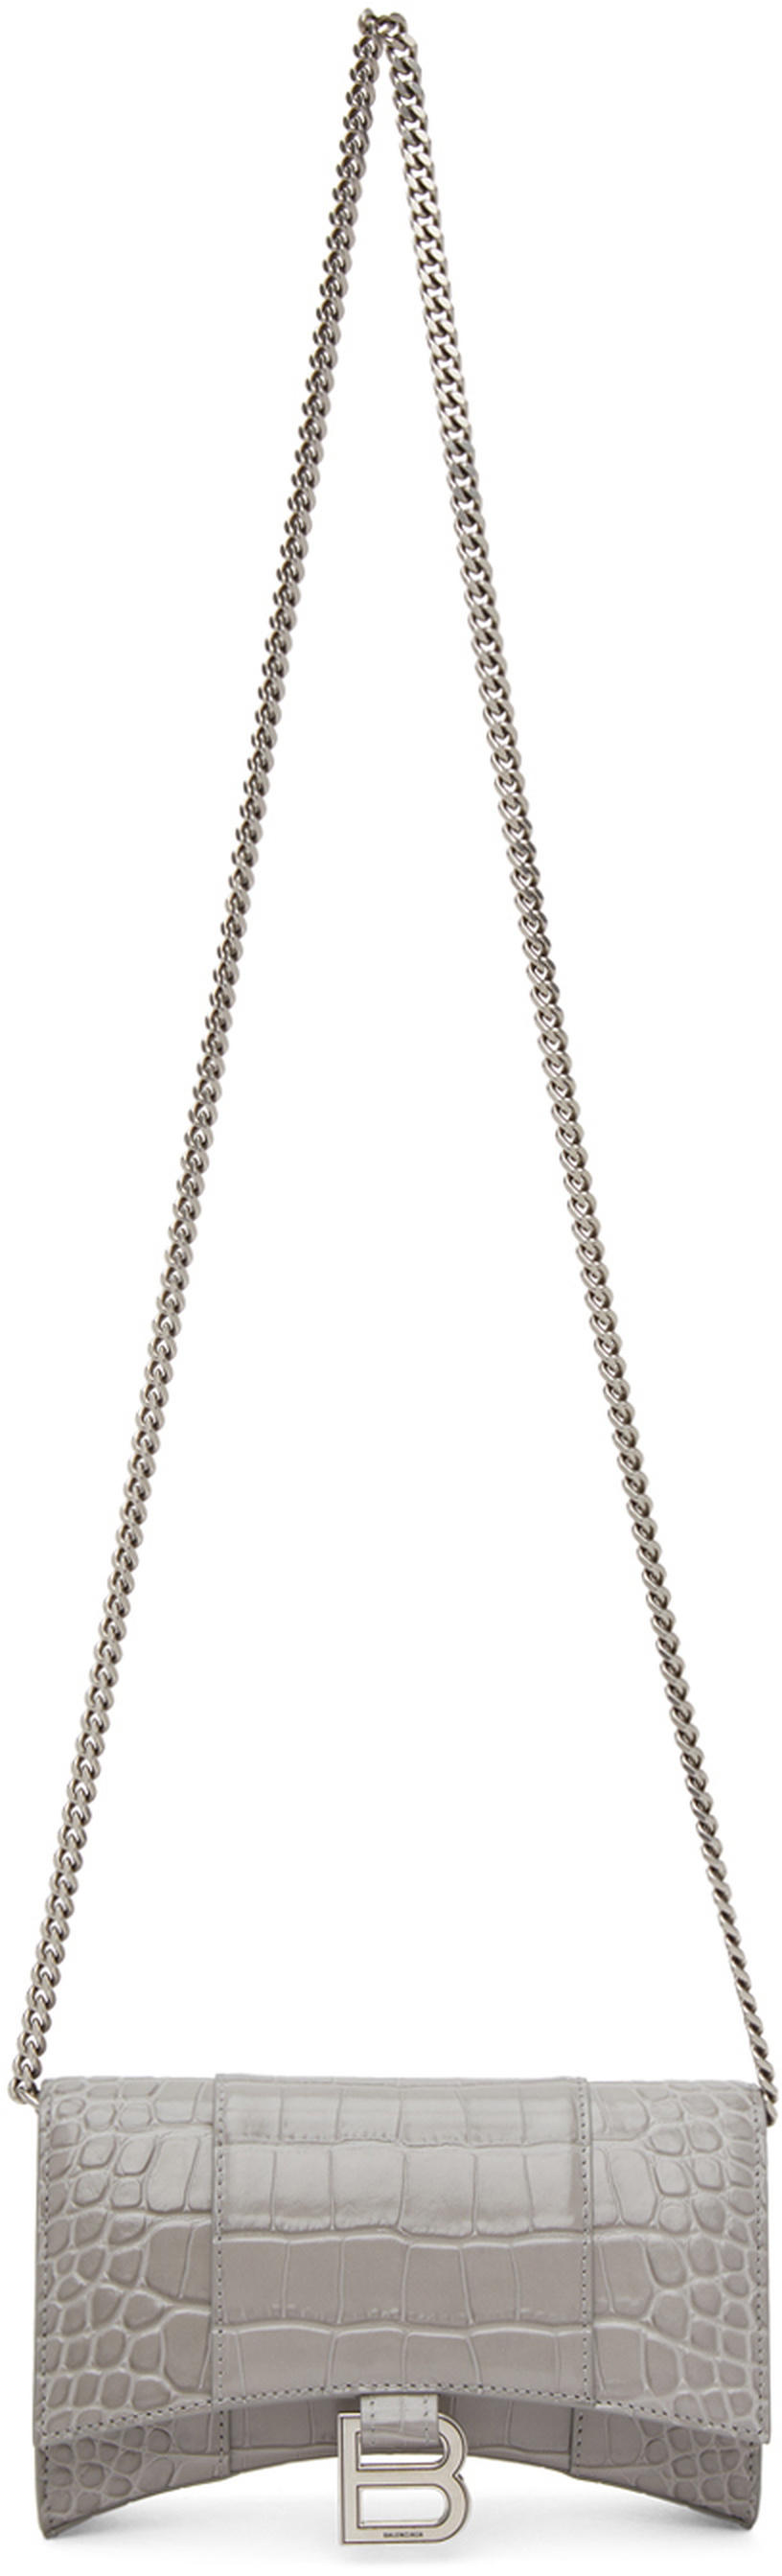 Balenciaga Hourglass Chain Leather Wallet on Chain